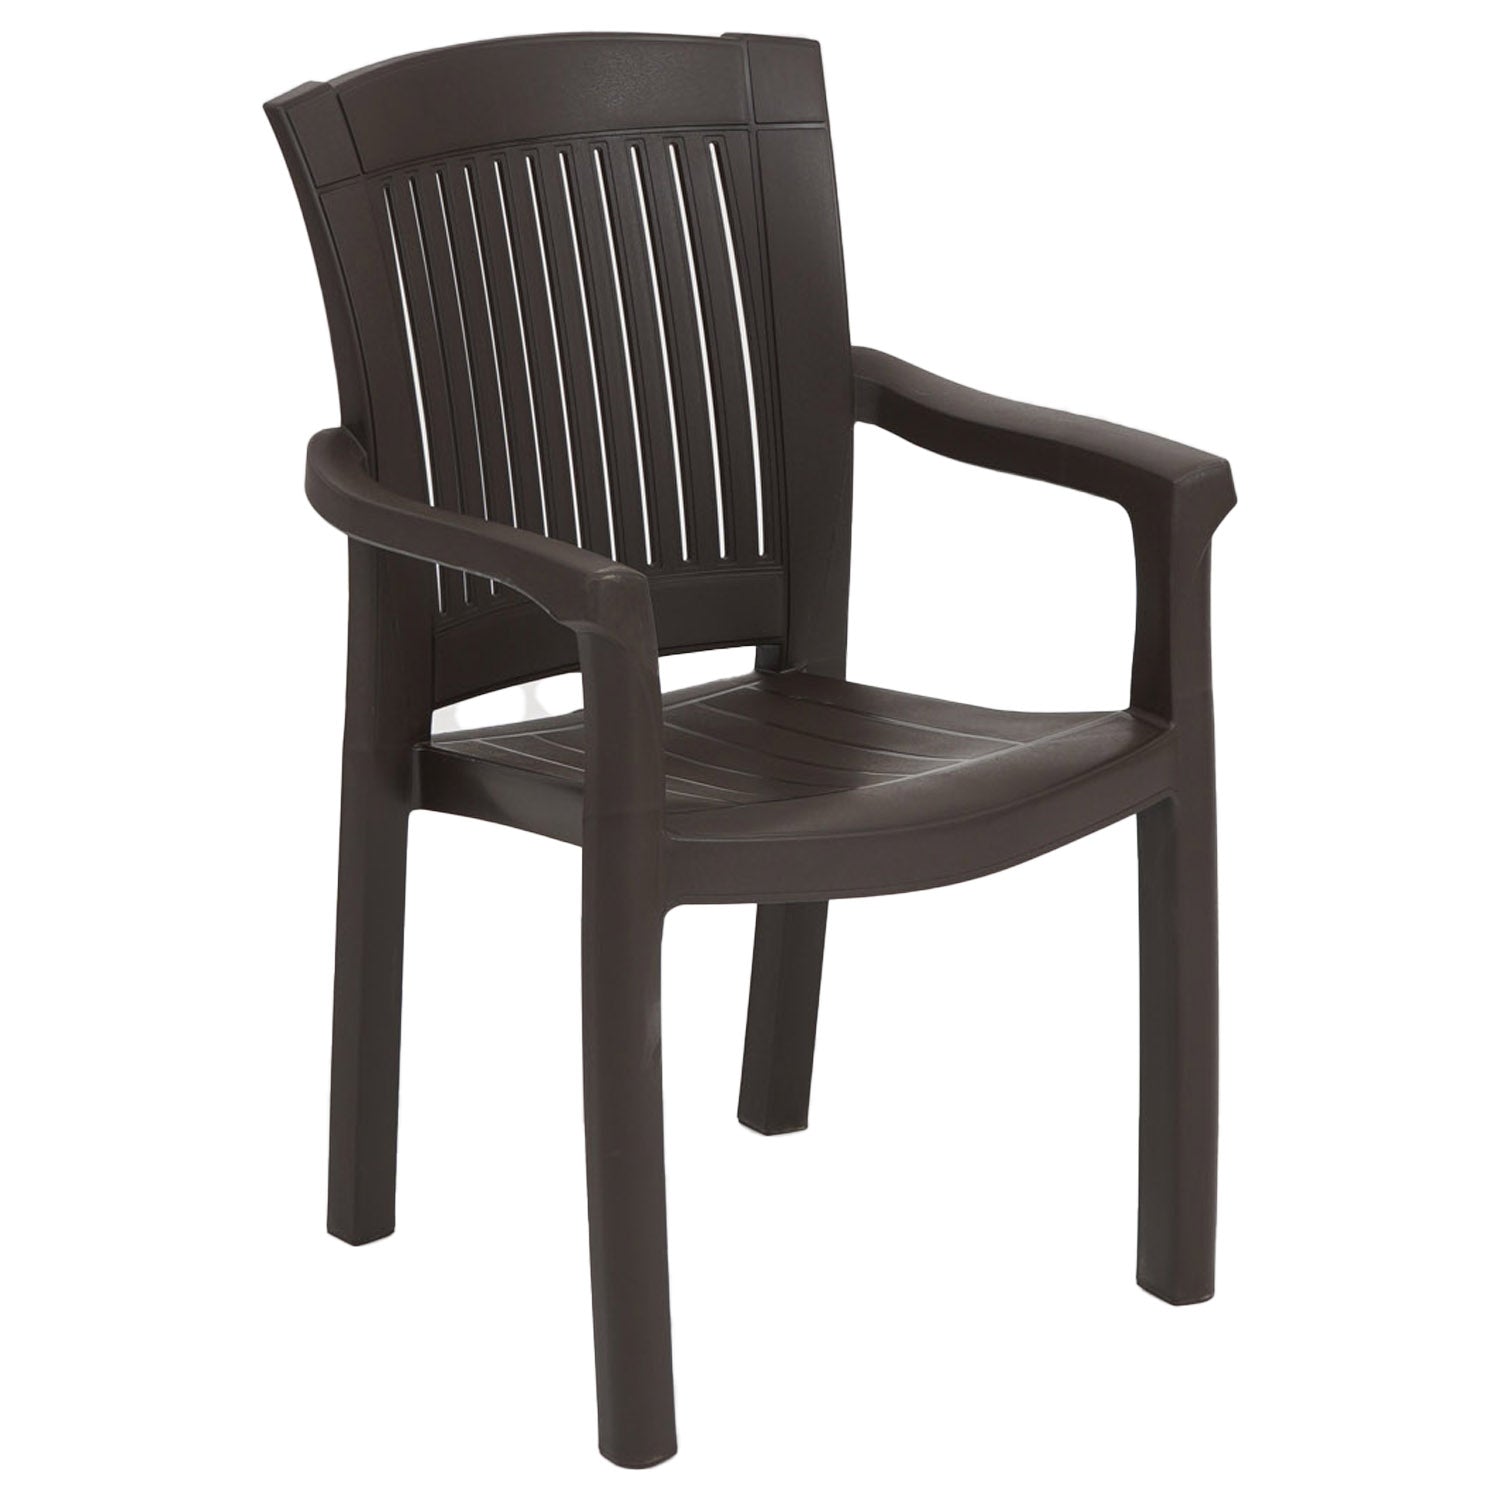 Nilkamal Plastic Chair with Arm (Charcoal Grey)